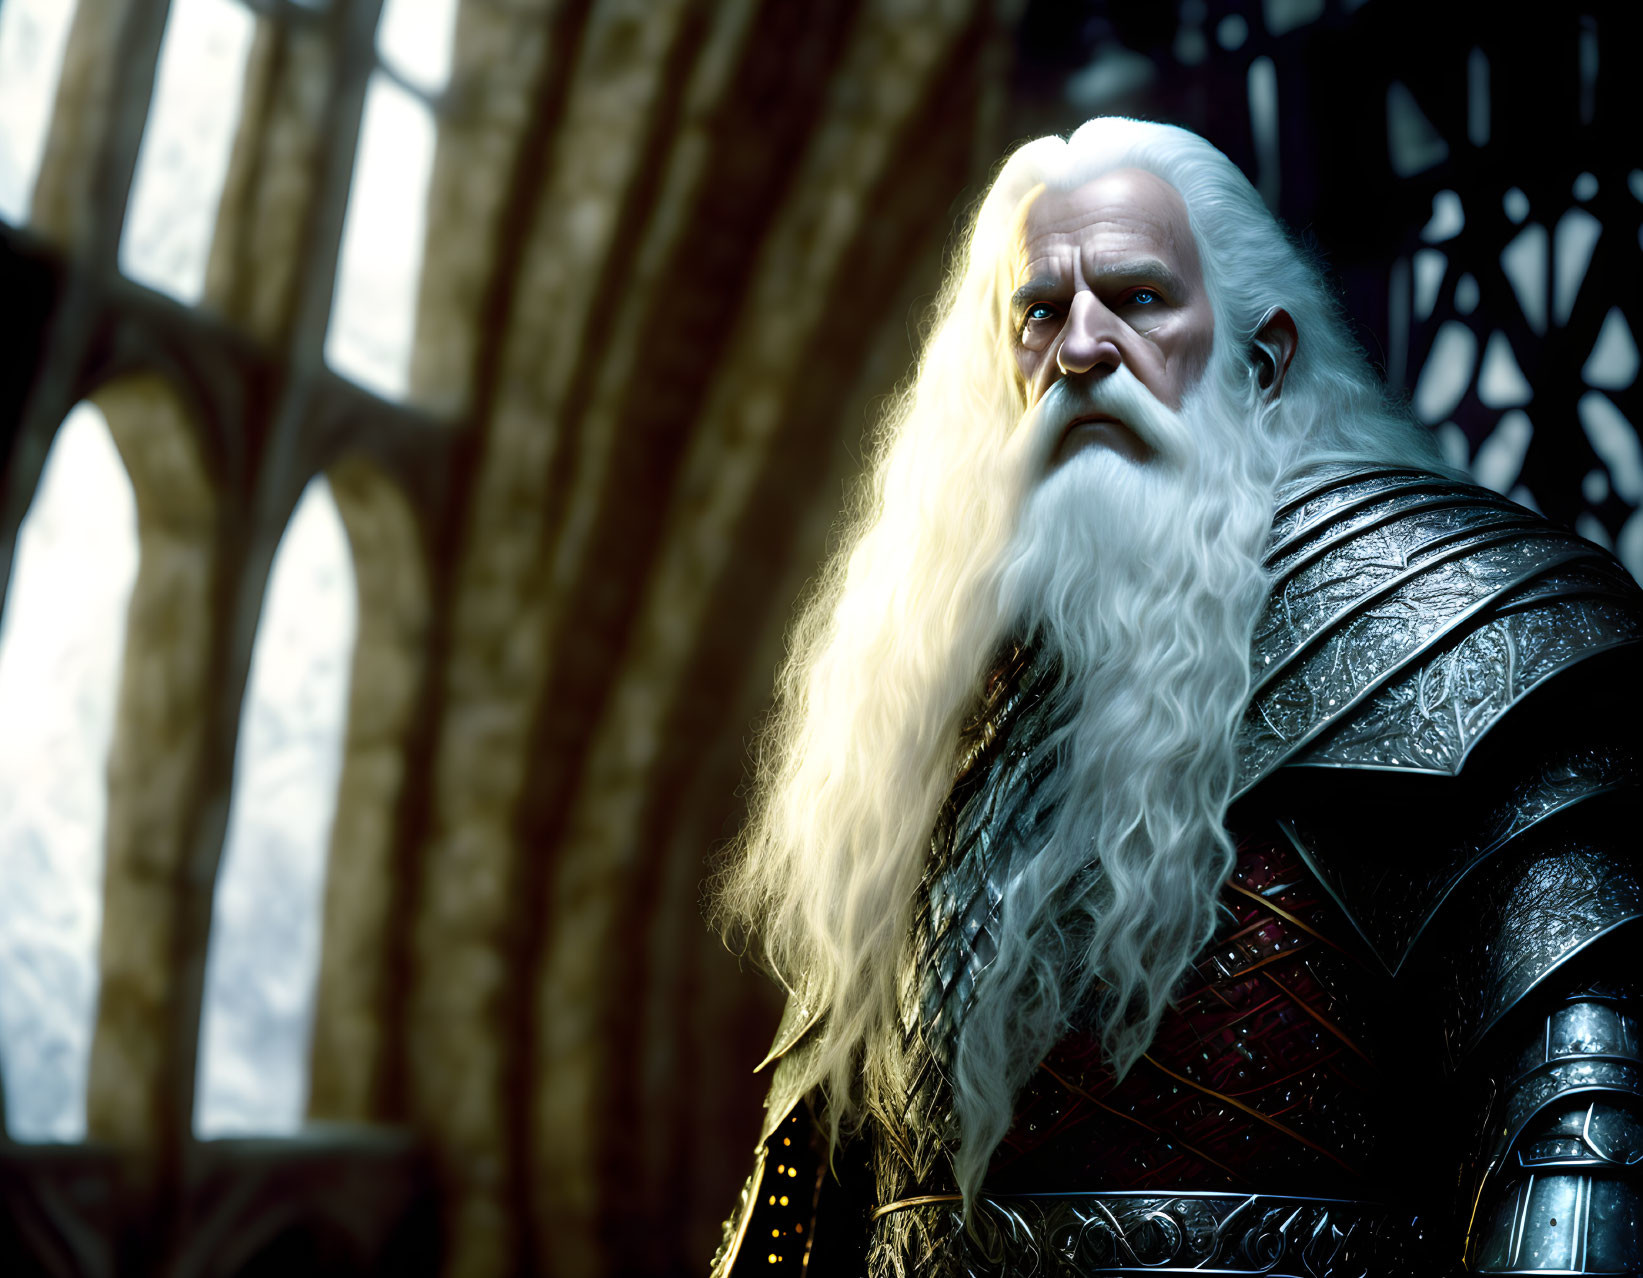 Elderly bearded fantasy character in ornate armor in grand hall